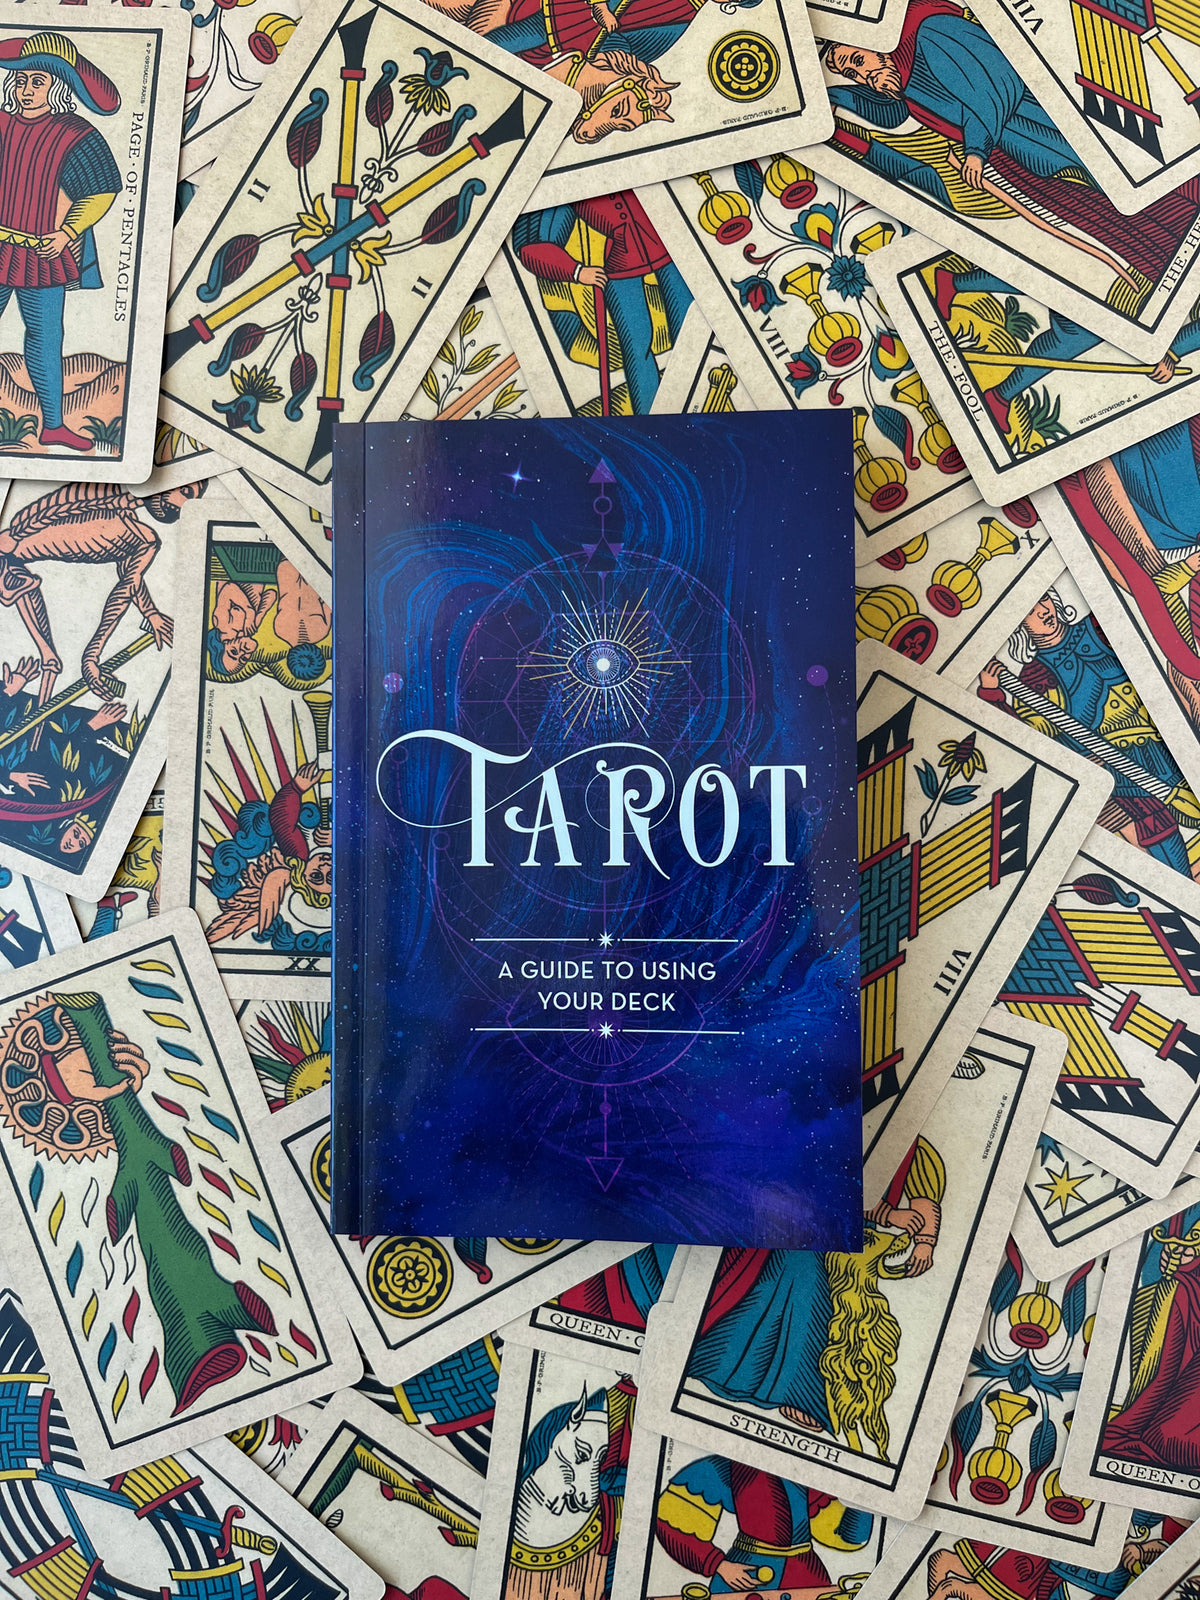 Tarot Book and Card Deck - Not Every Libra